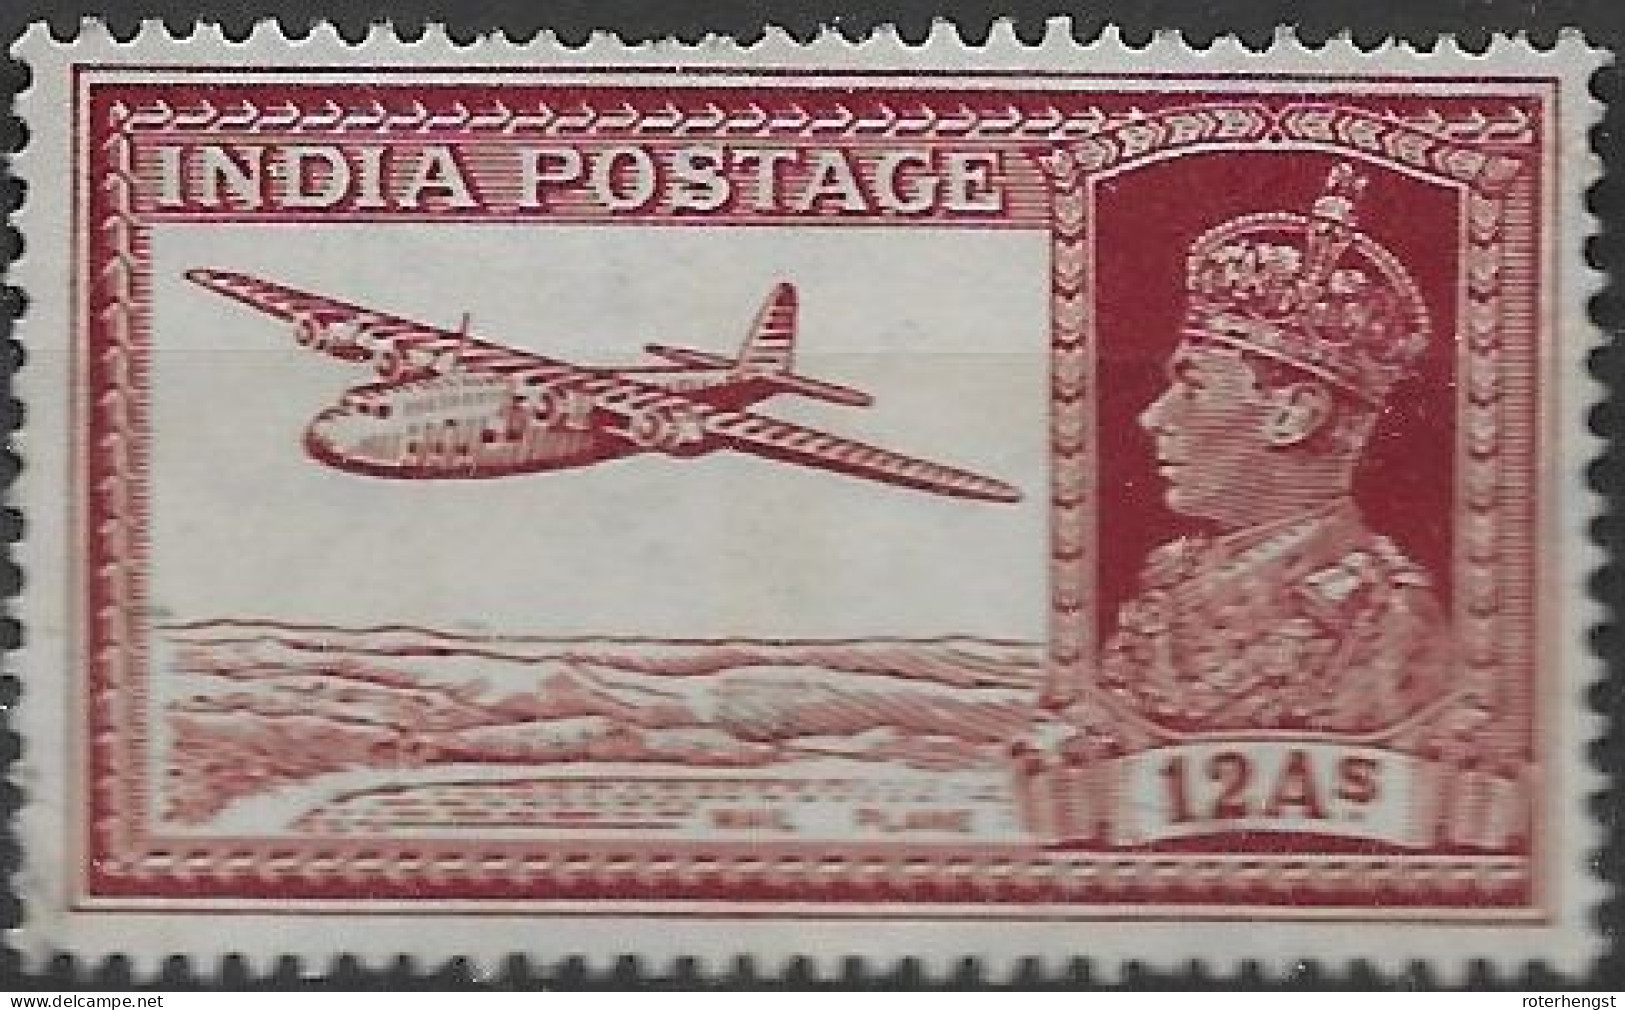 India Mh * 1941 22 Euros - 1936-47 Roi Georges VI